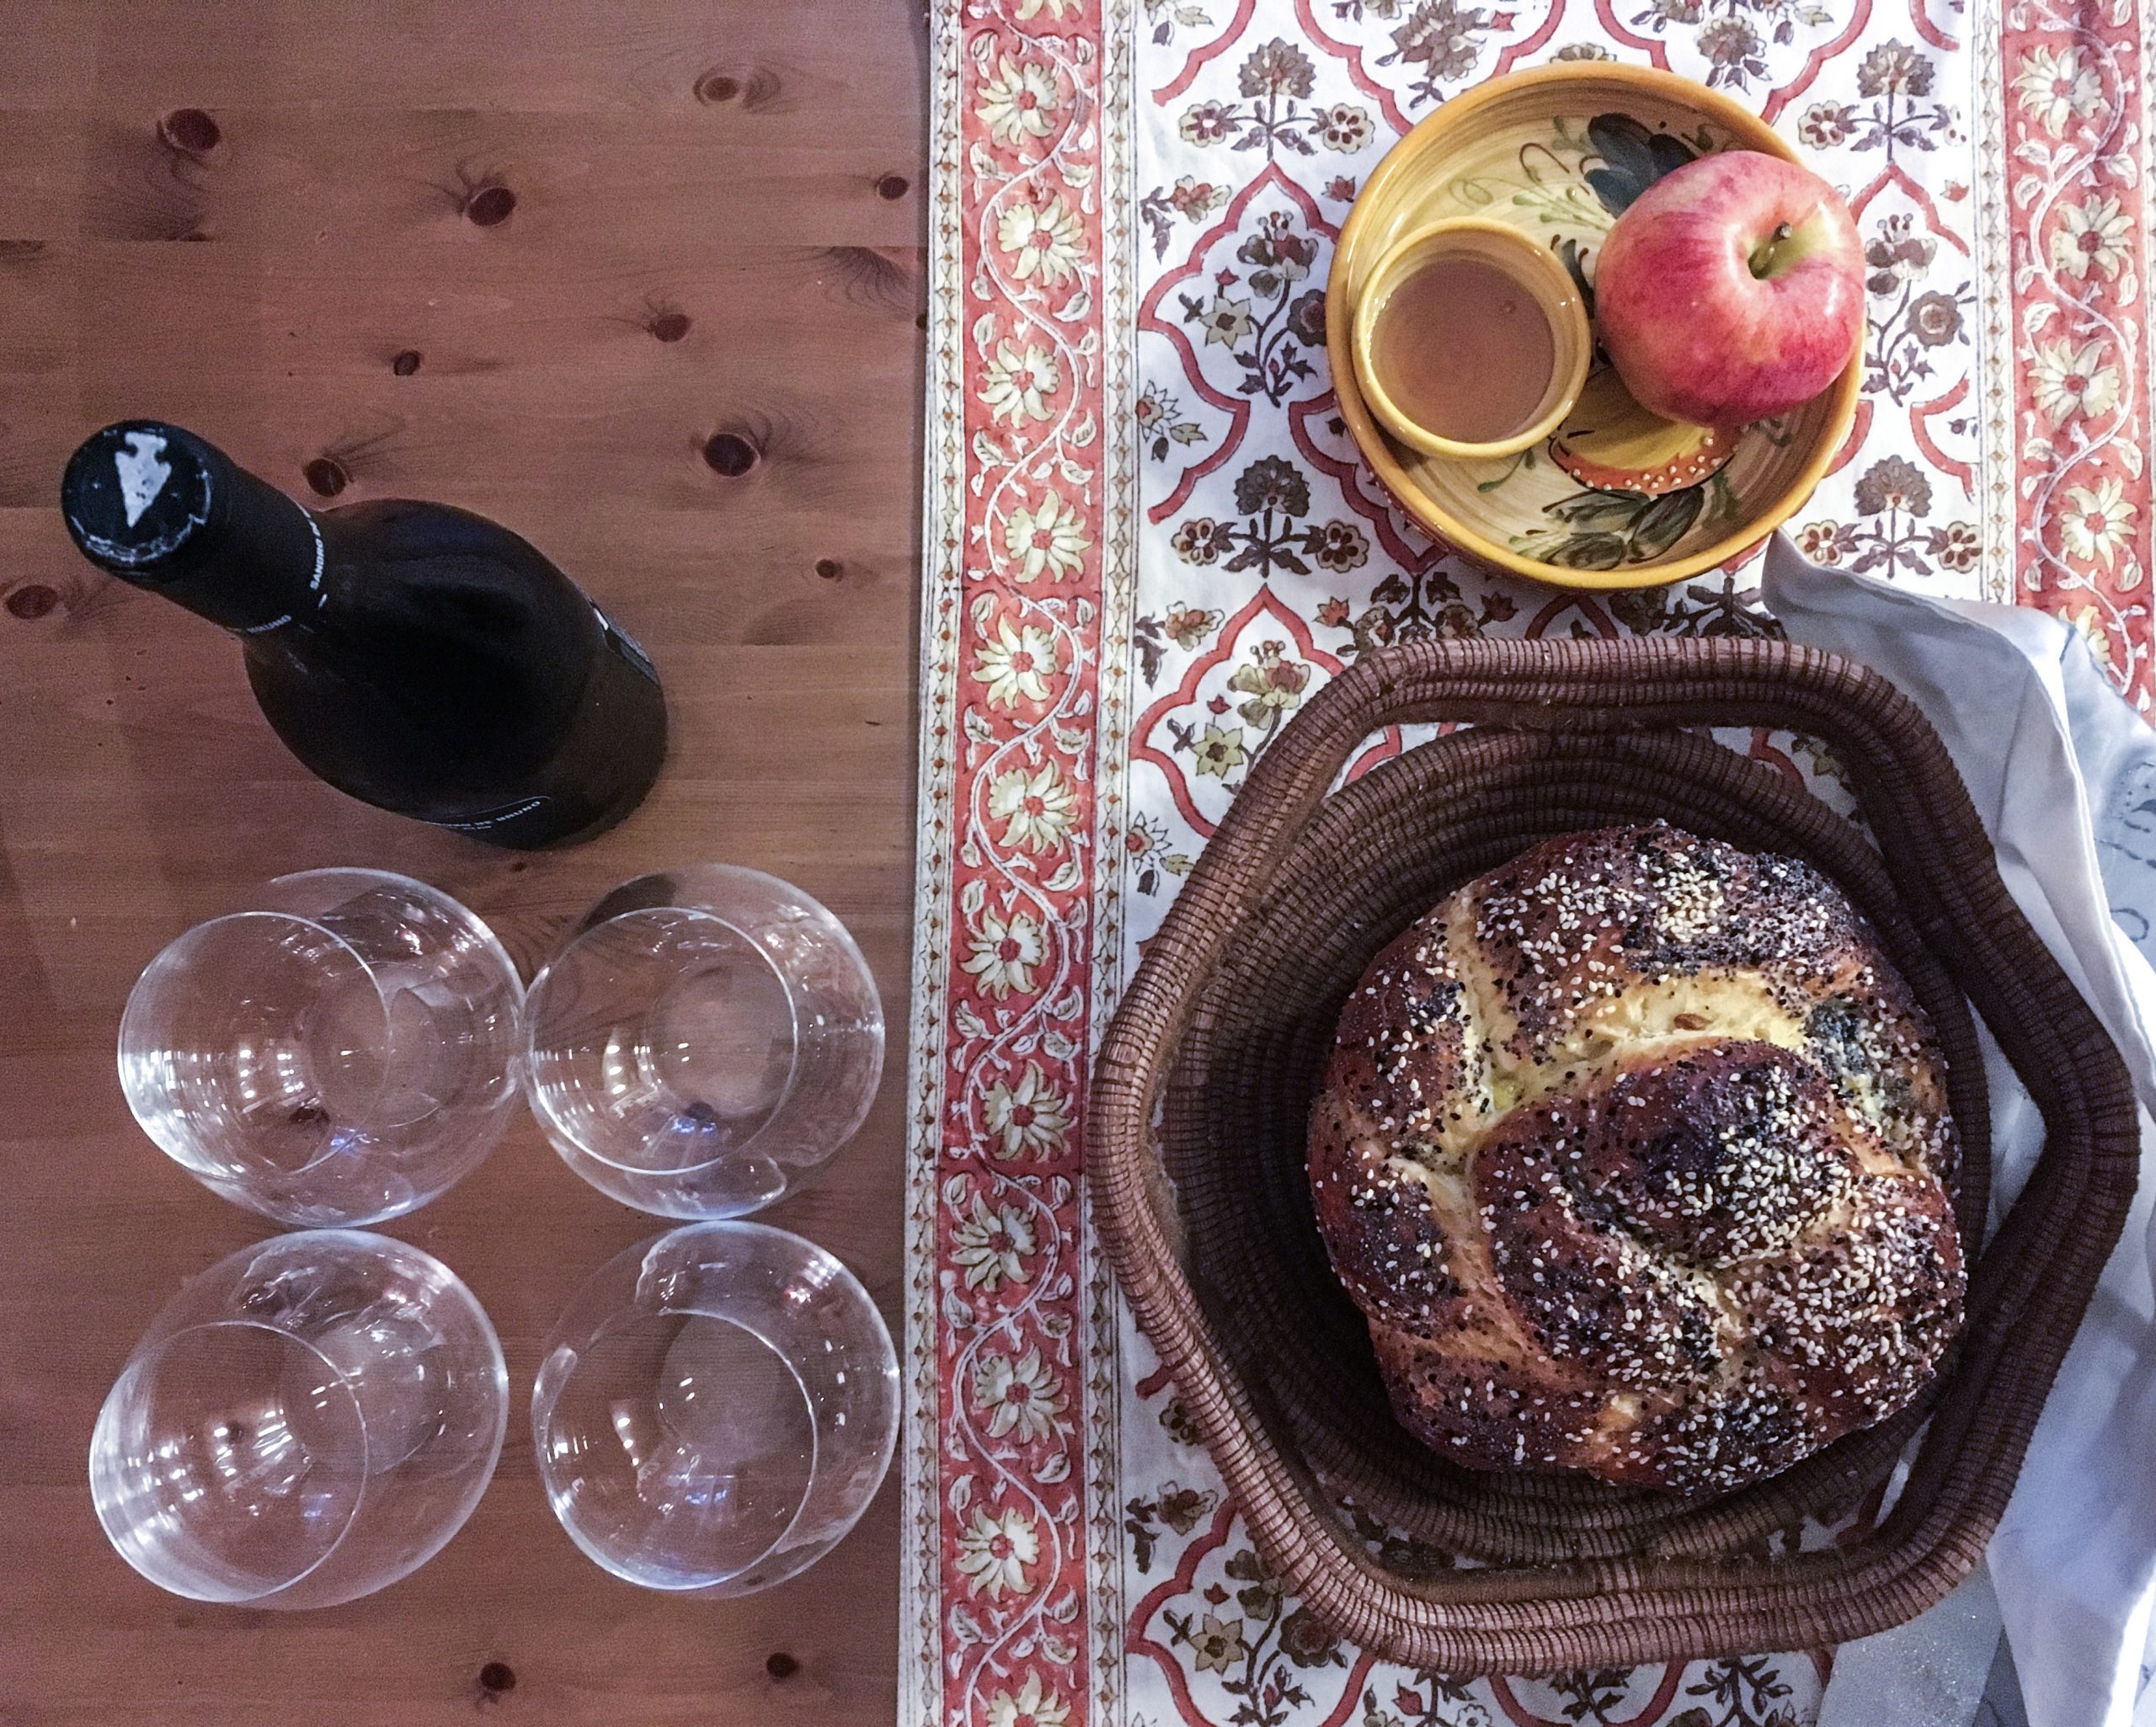 ROSH HASHANAH CHALLAH DEMO: Round Jewish Holiday Bread with Apples, Raisins, and Honey